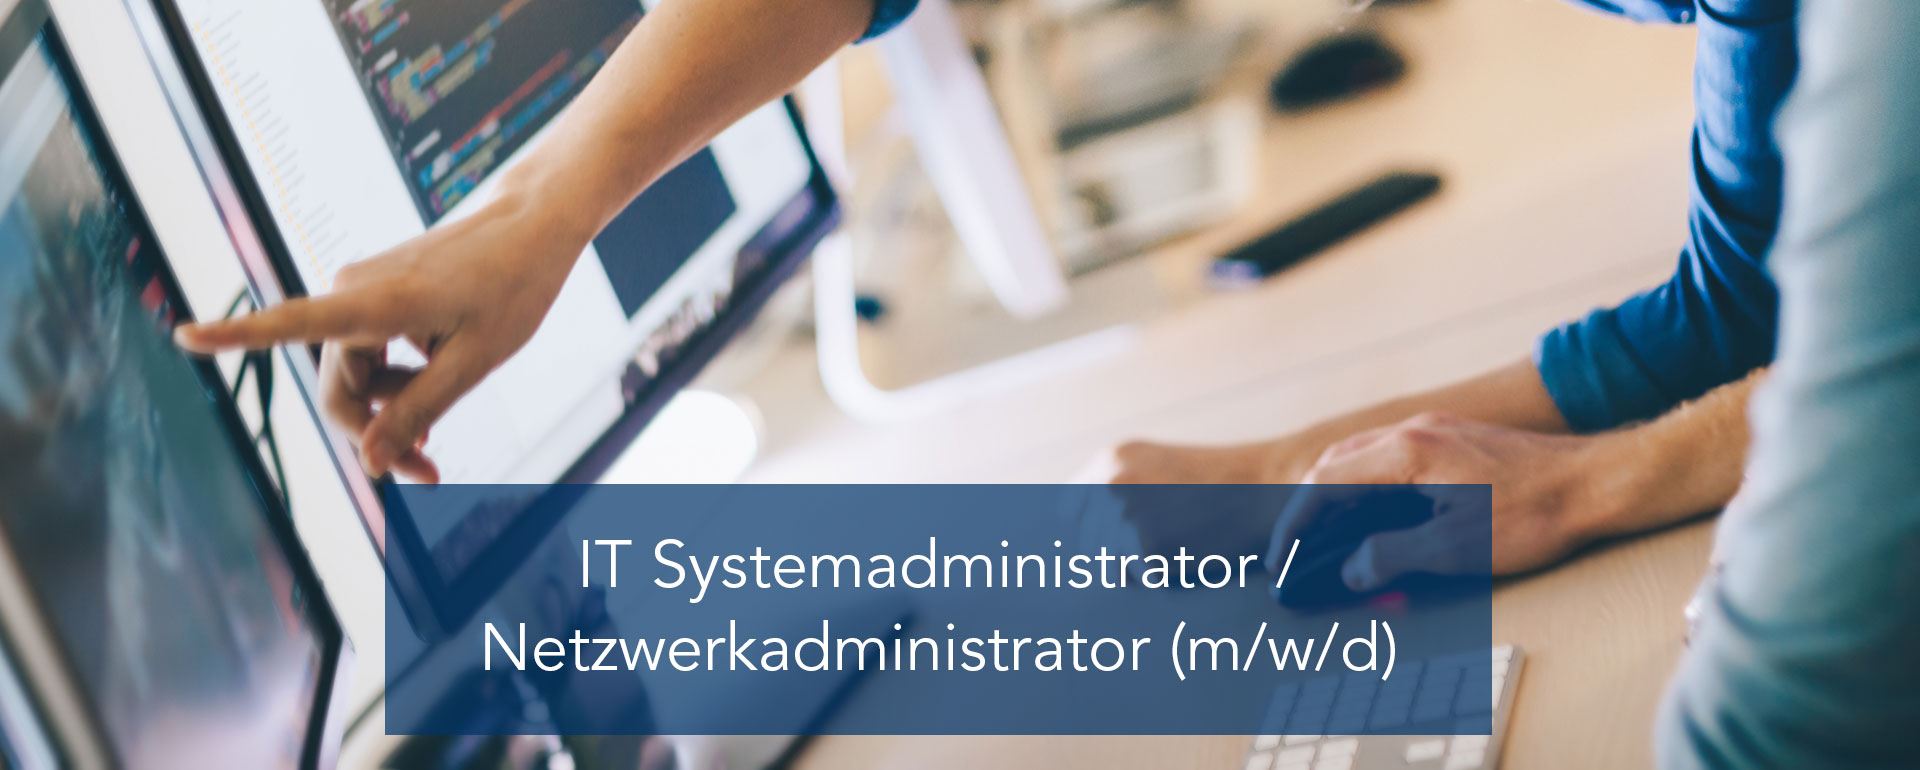 IT Systemadministrator/Netzwerkadministrator (m/w/d)